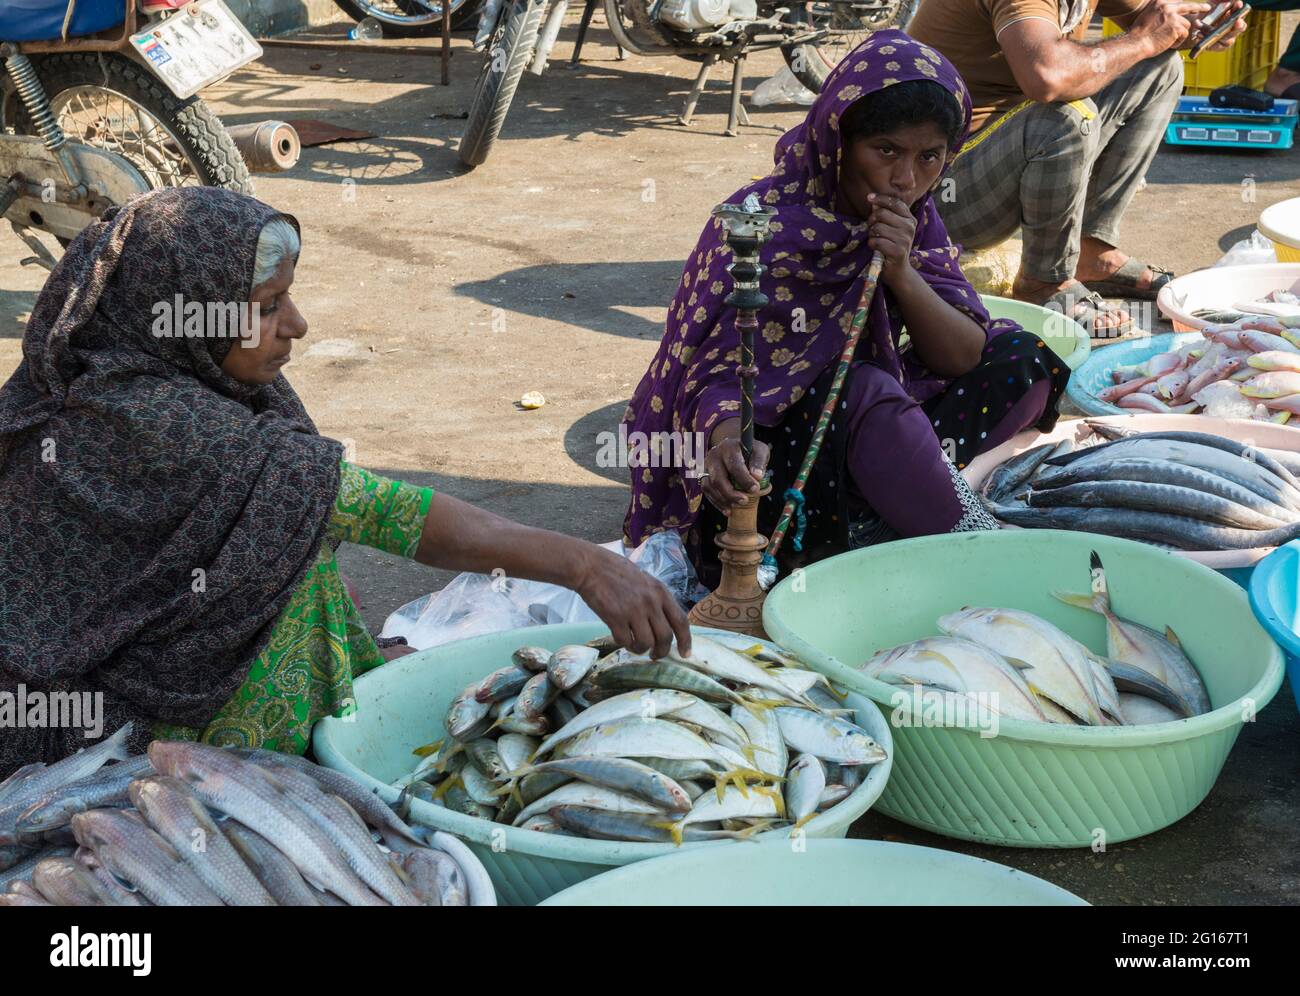 Bandari women, the right woman smoking a hookah, selling fish on the market.Bandar Abbas, Hormozgān Province, Iran Stock Photo